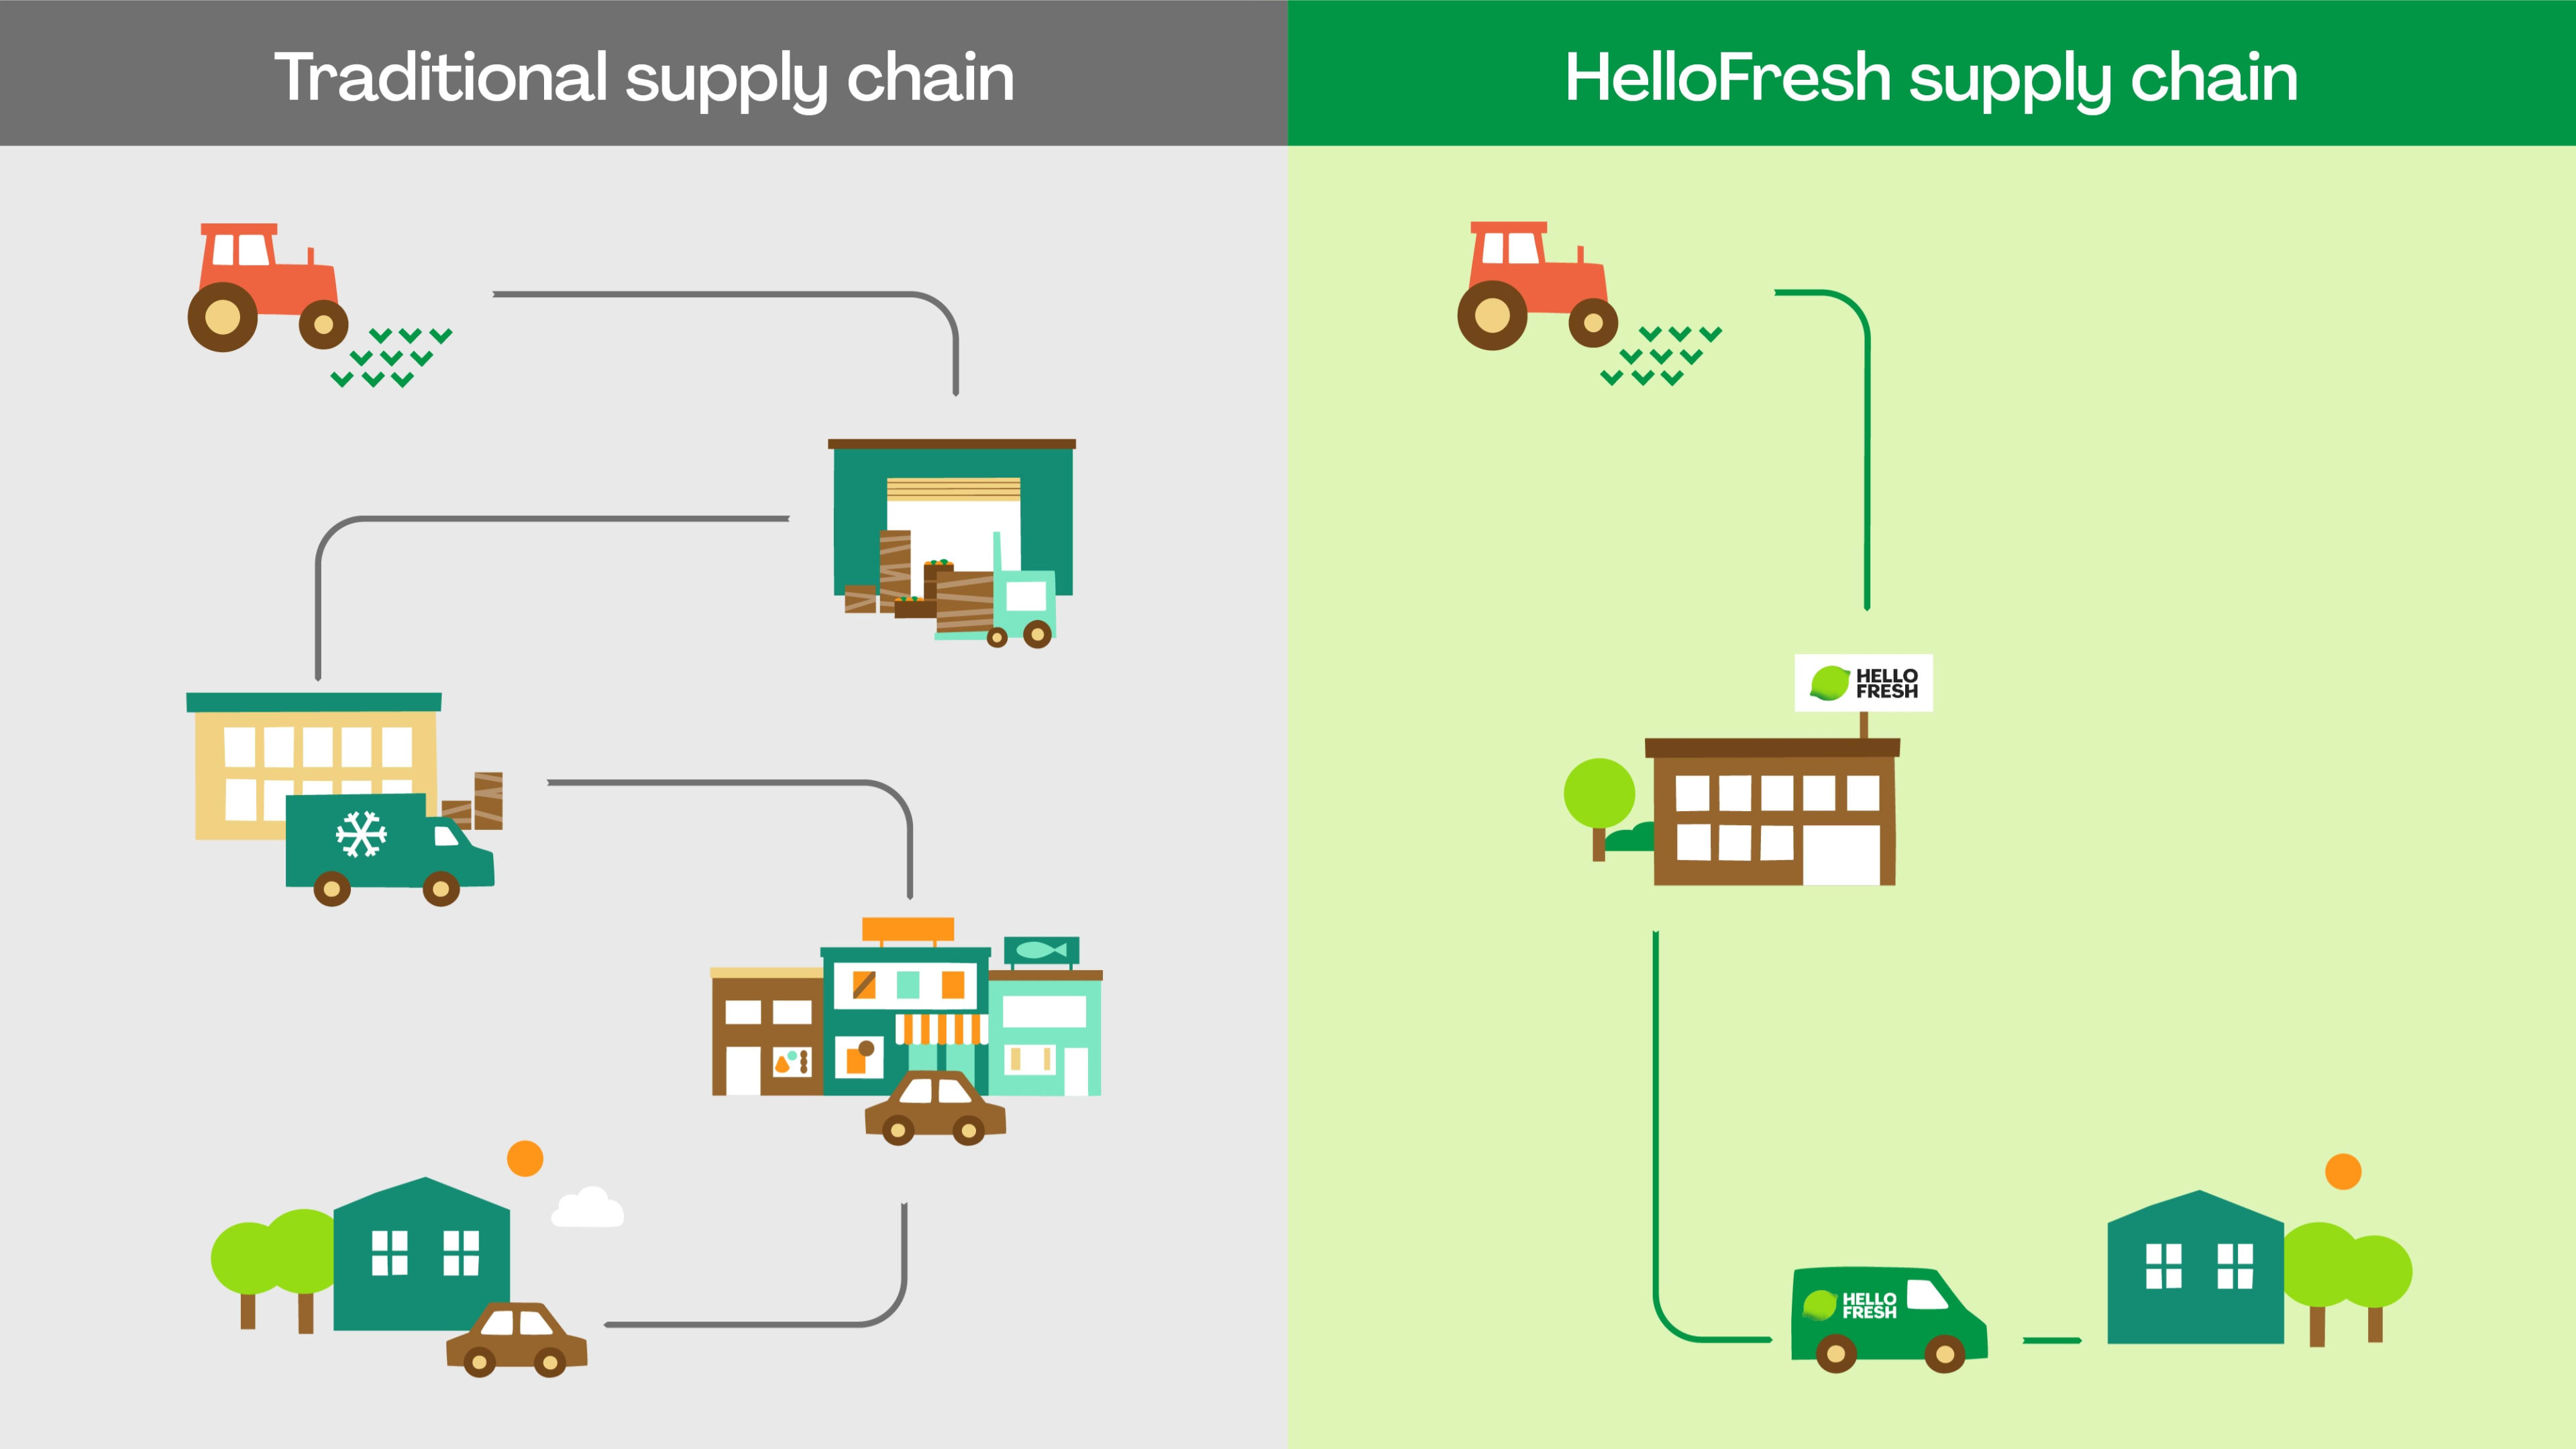 Supply Chain: Grocery Stores vs. HelloFresh 